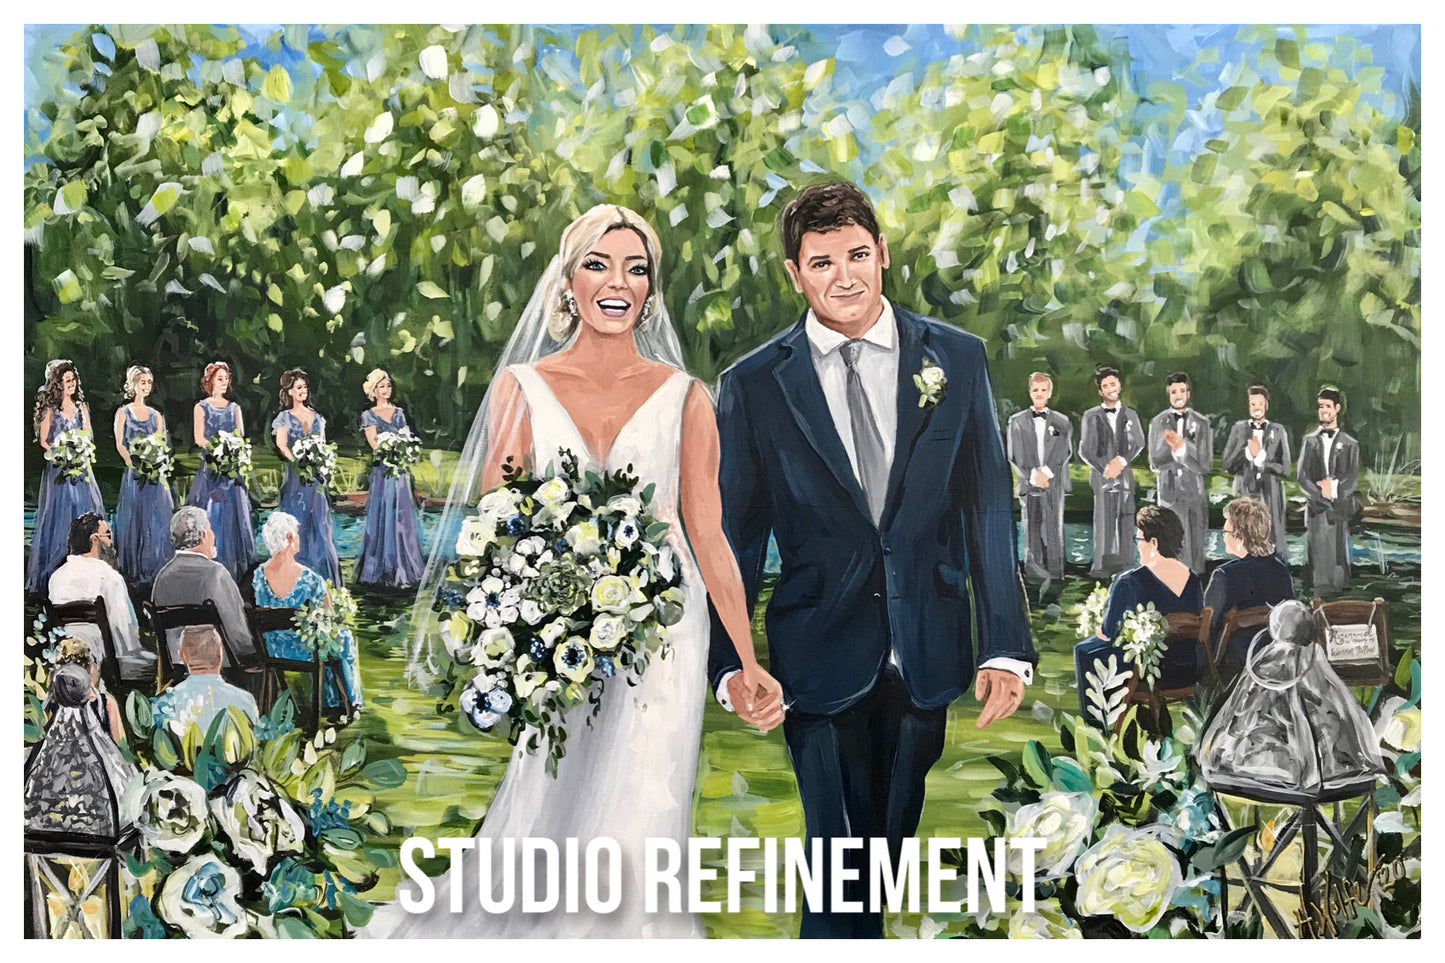 Sample: Live Wedding Painting after studio refinement